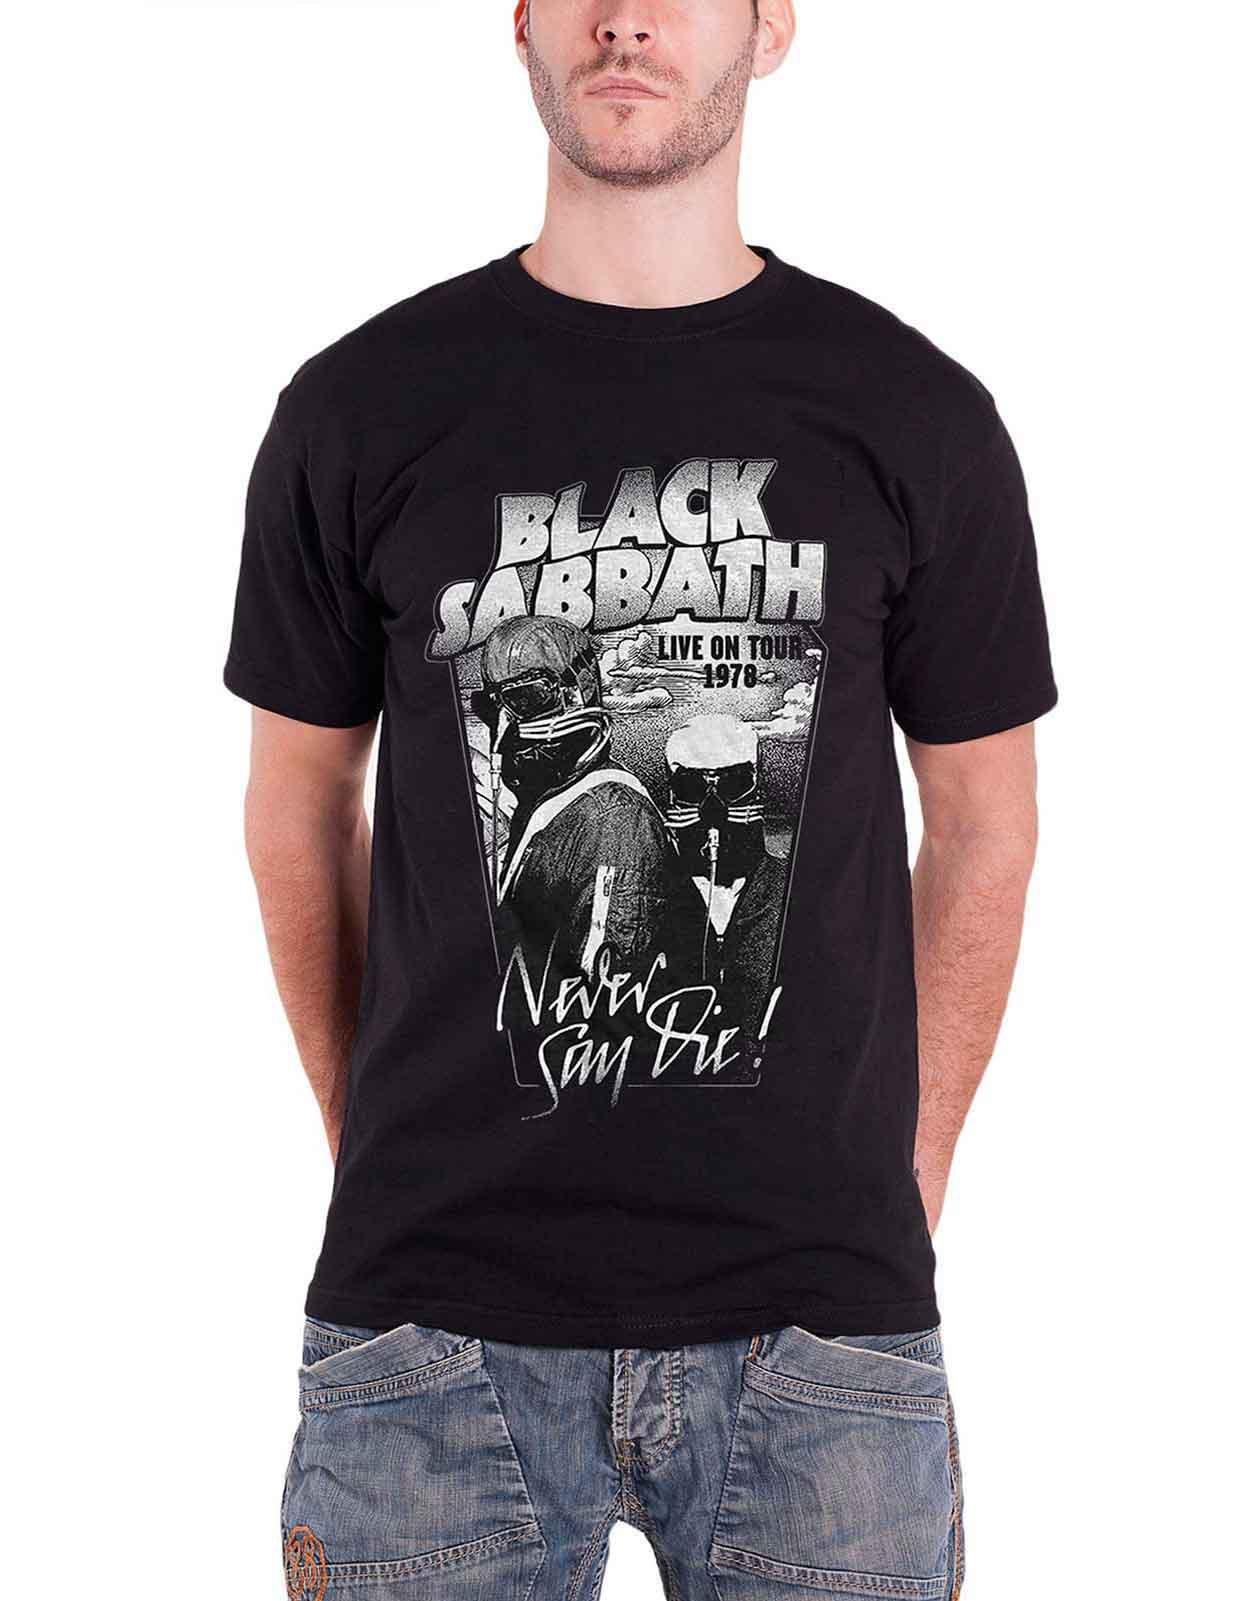 Черная футболка Never Say Die Live on Tour 1978 Black Sabbath, черный rare 80s mercenaries never say die military armed special force men t shirt short casual customized products